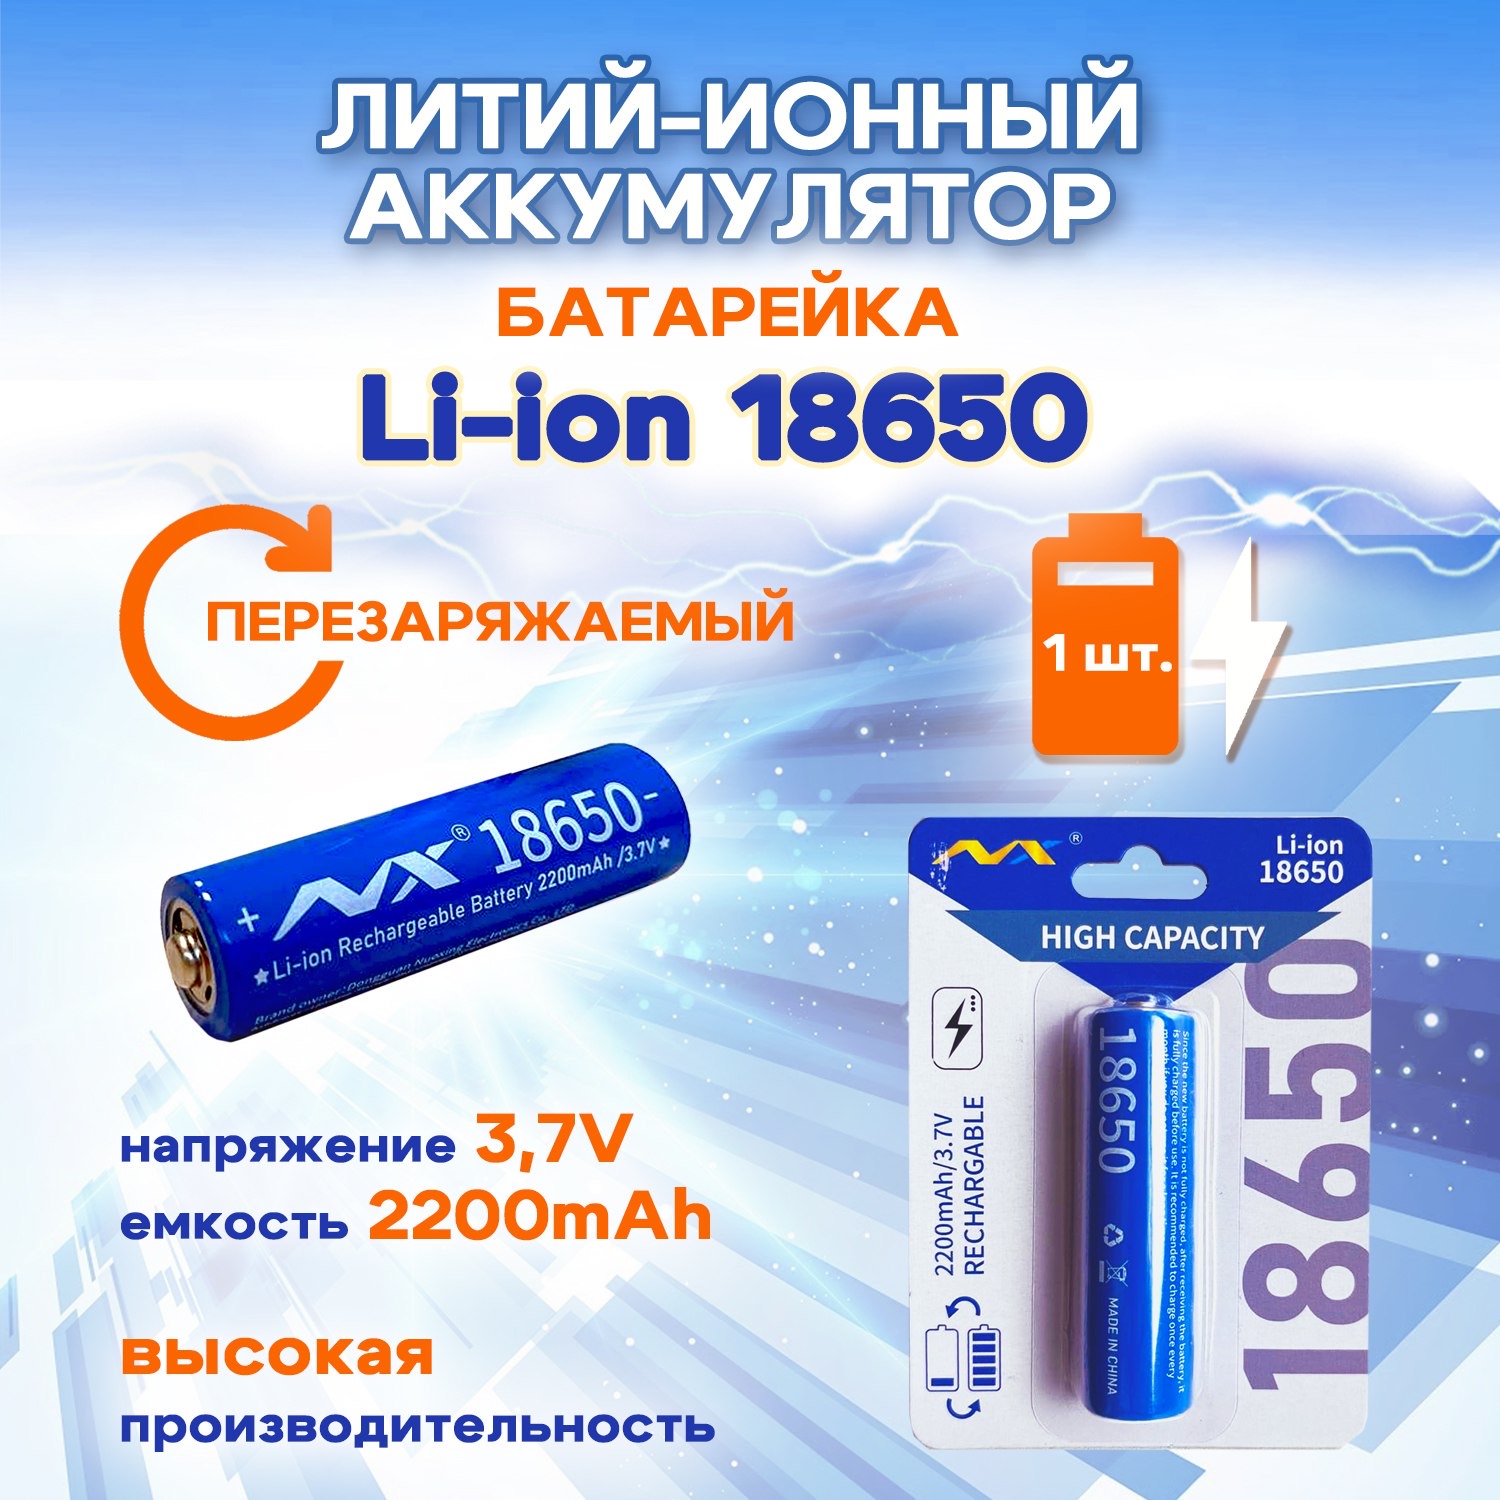 Батарейка-аккумулятор SUPER ENERGY 18650 3,7 В литий-ионный перезаряжаемый 2200 mAh, 1 шт аккумулятор для шуруповертов макита заряд